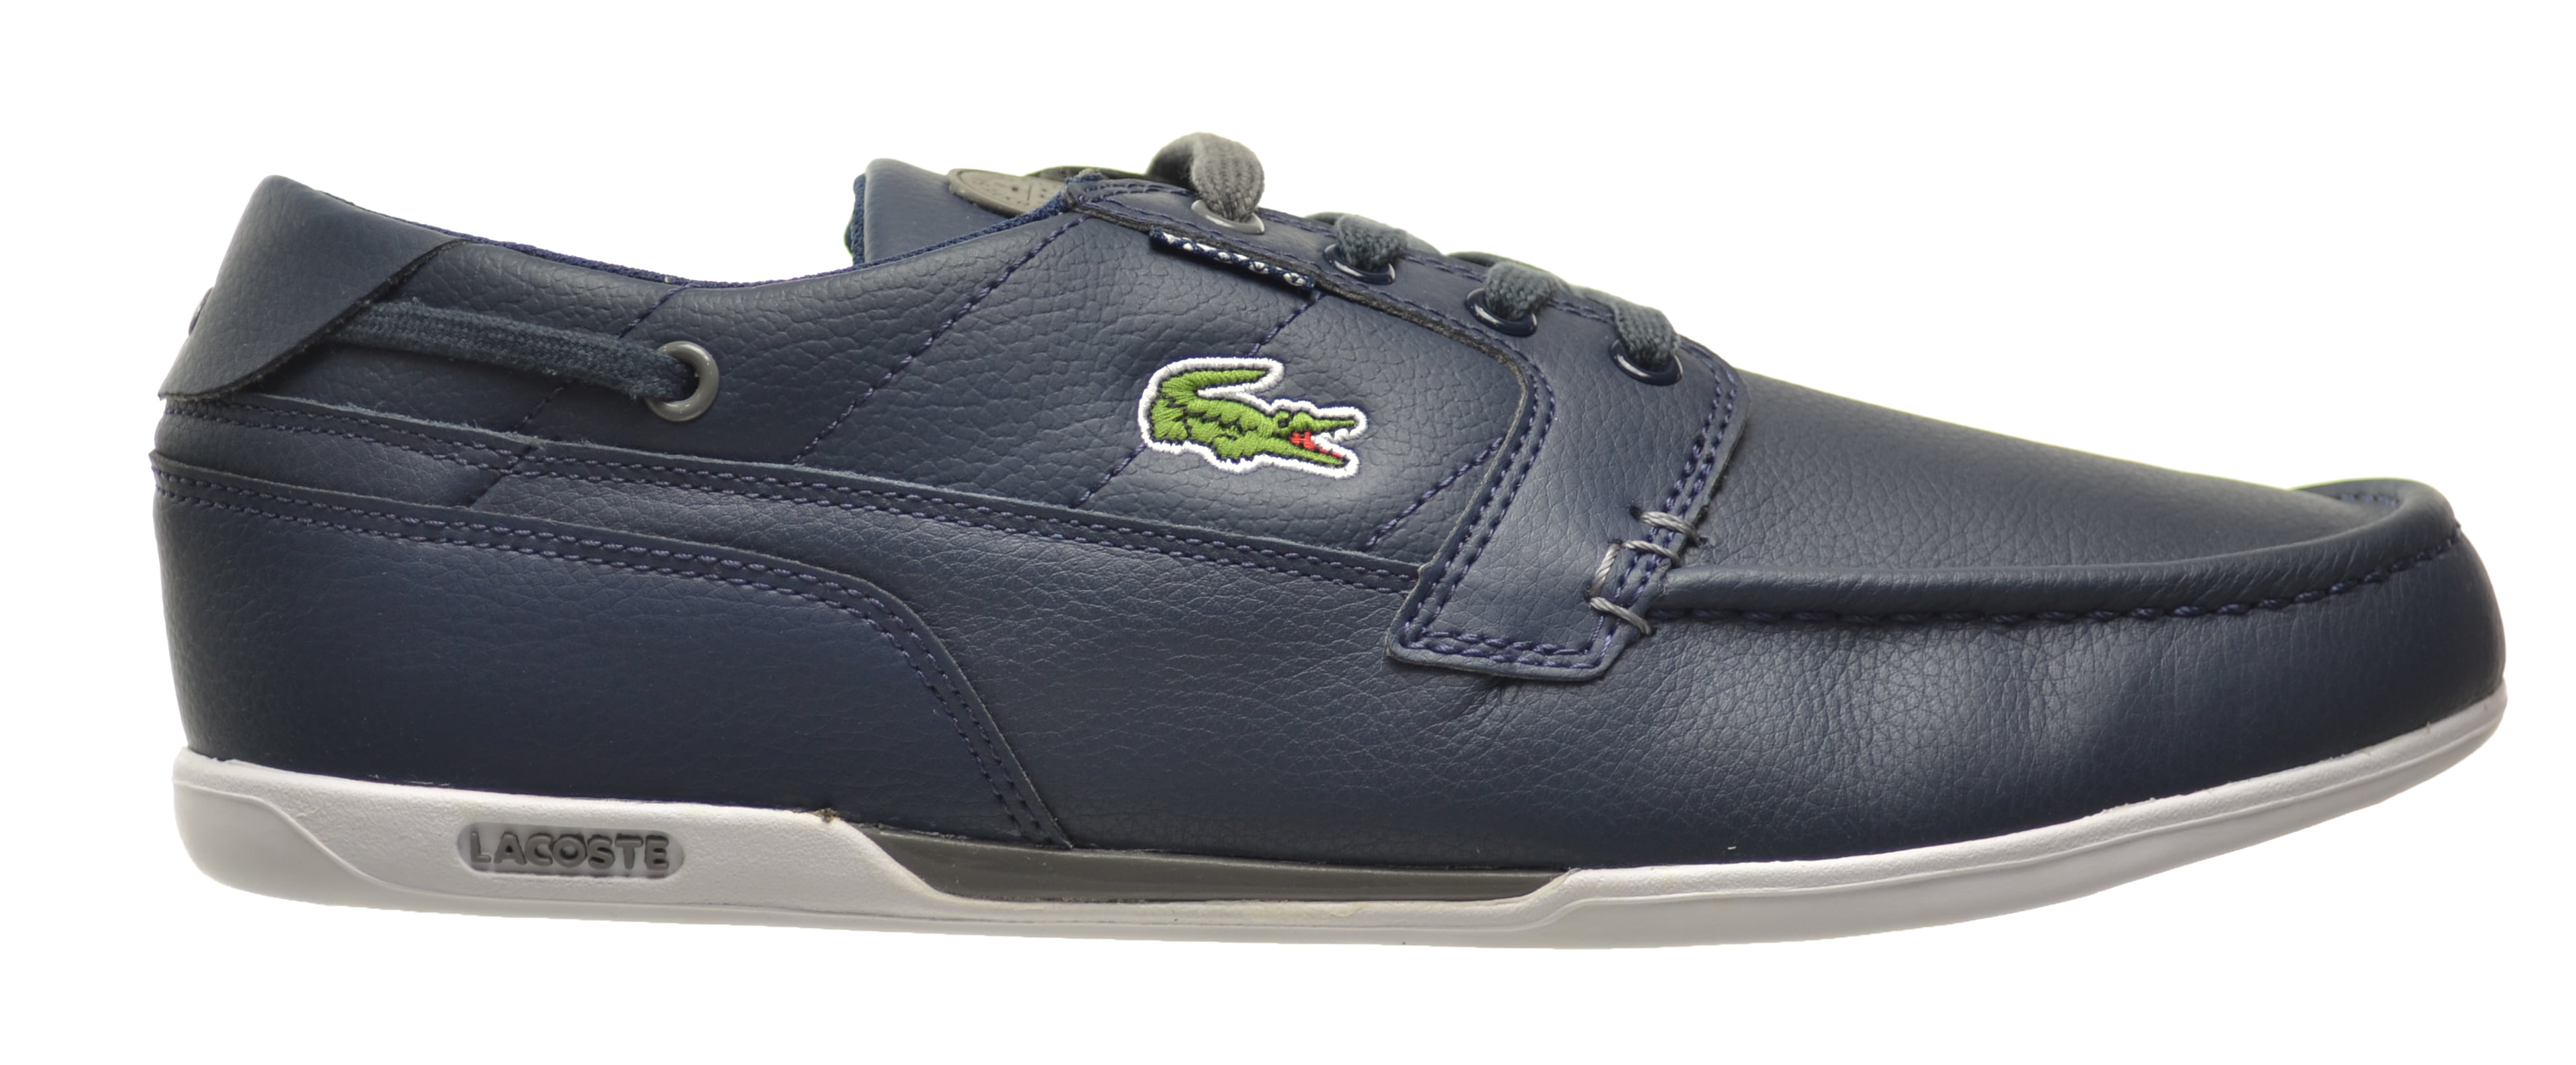 CR2 SPM Men's Shoes Dark Blue/Grey 7-29spm0073-2f1 - Walmart.com